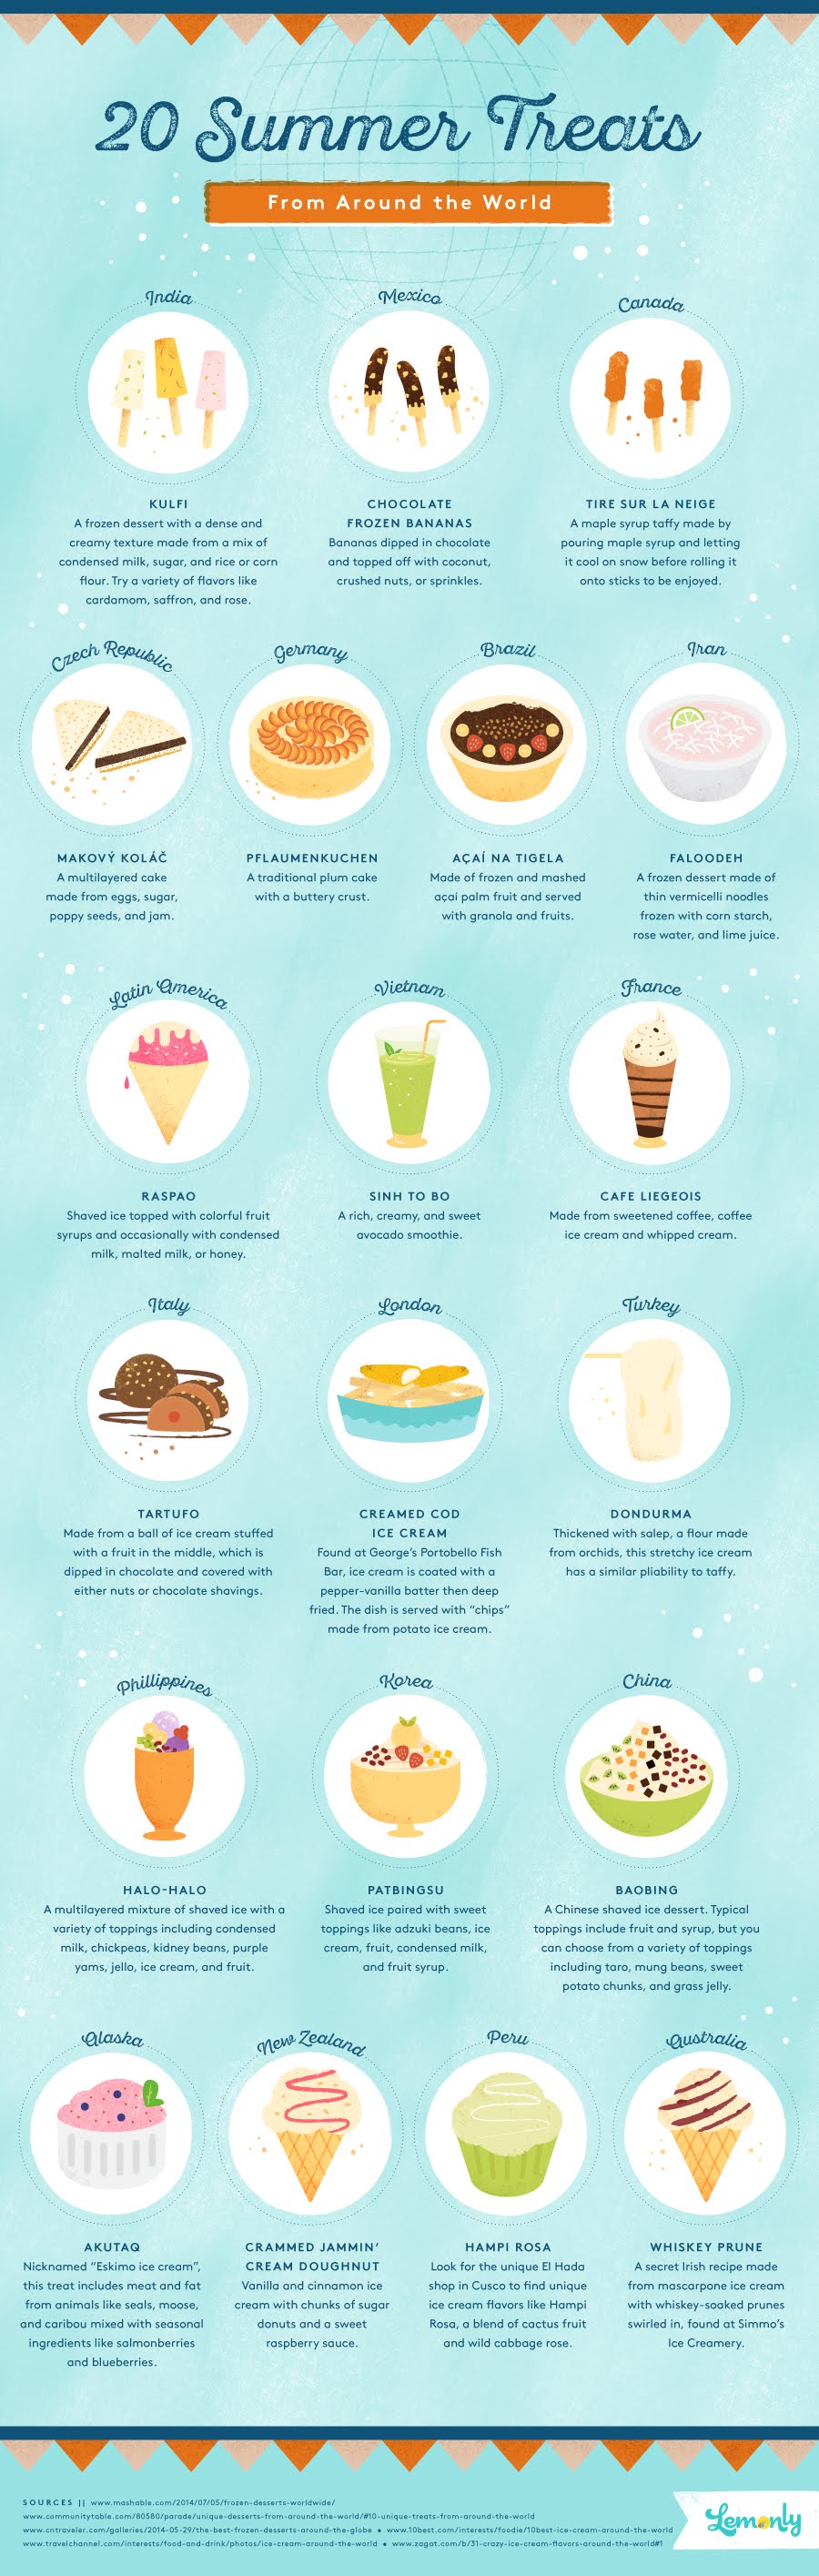 20 summer treats around the world #infographic